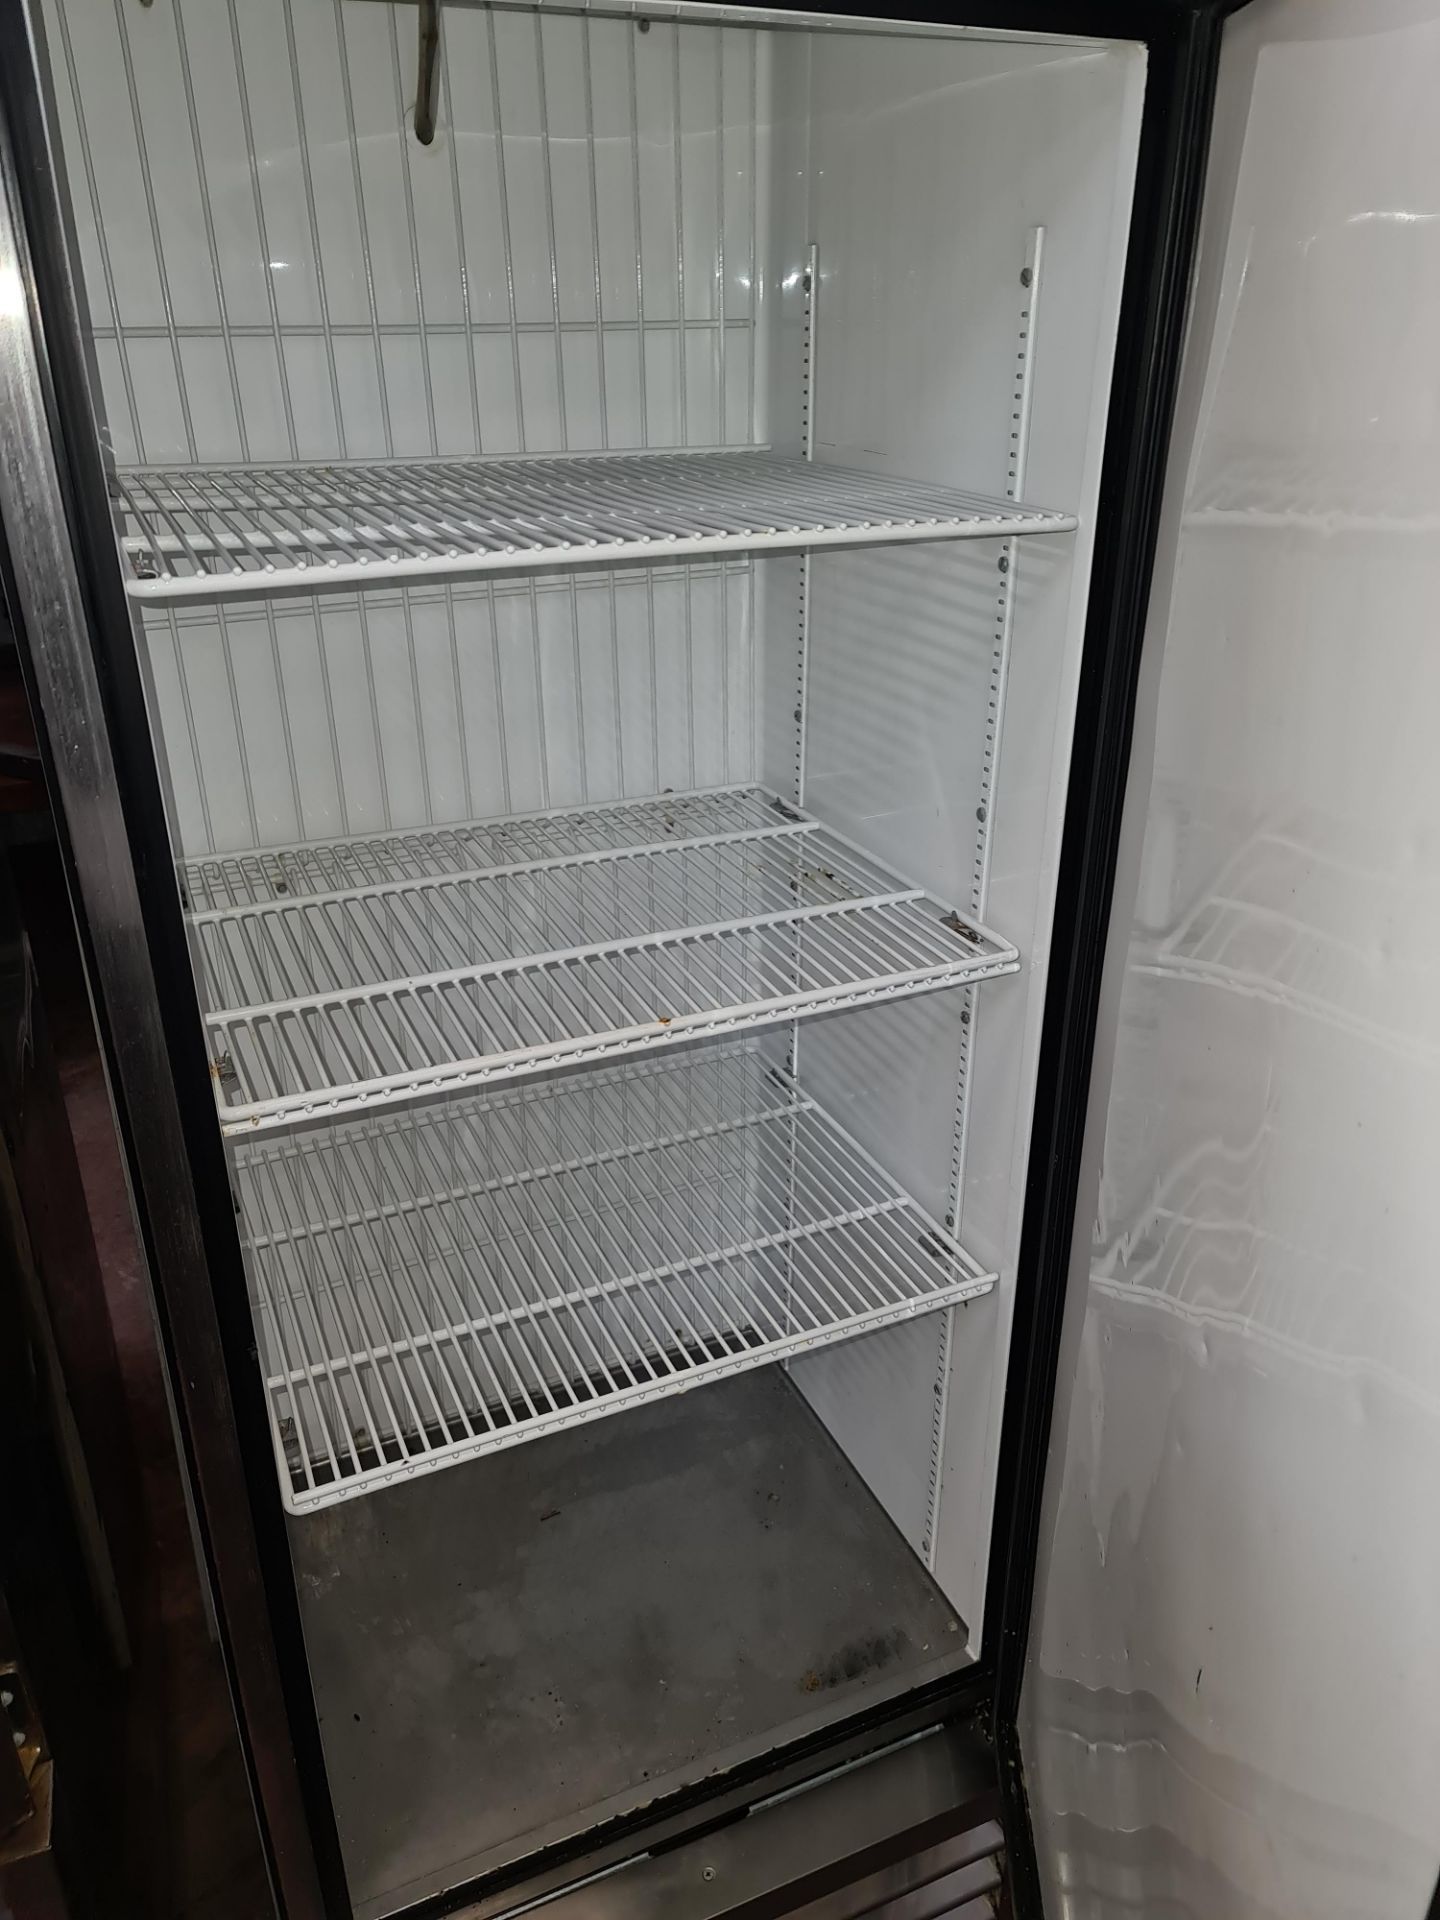 True Refrigeration stainless steel freezer - Image 4 of 4